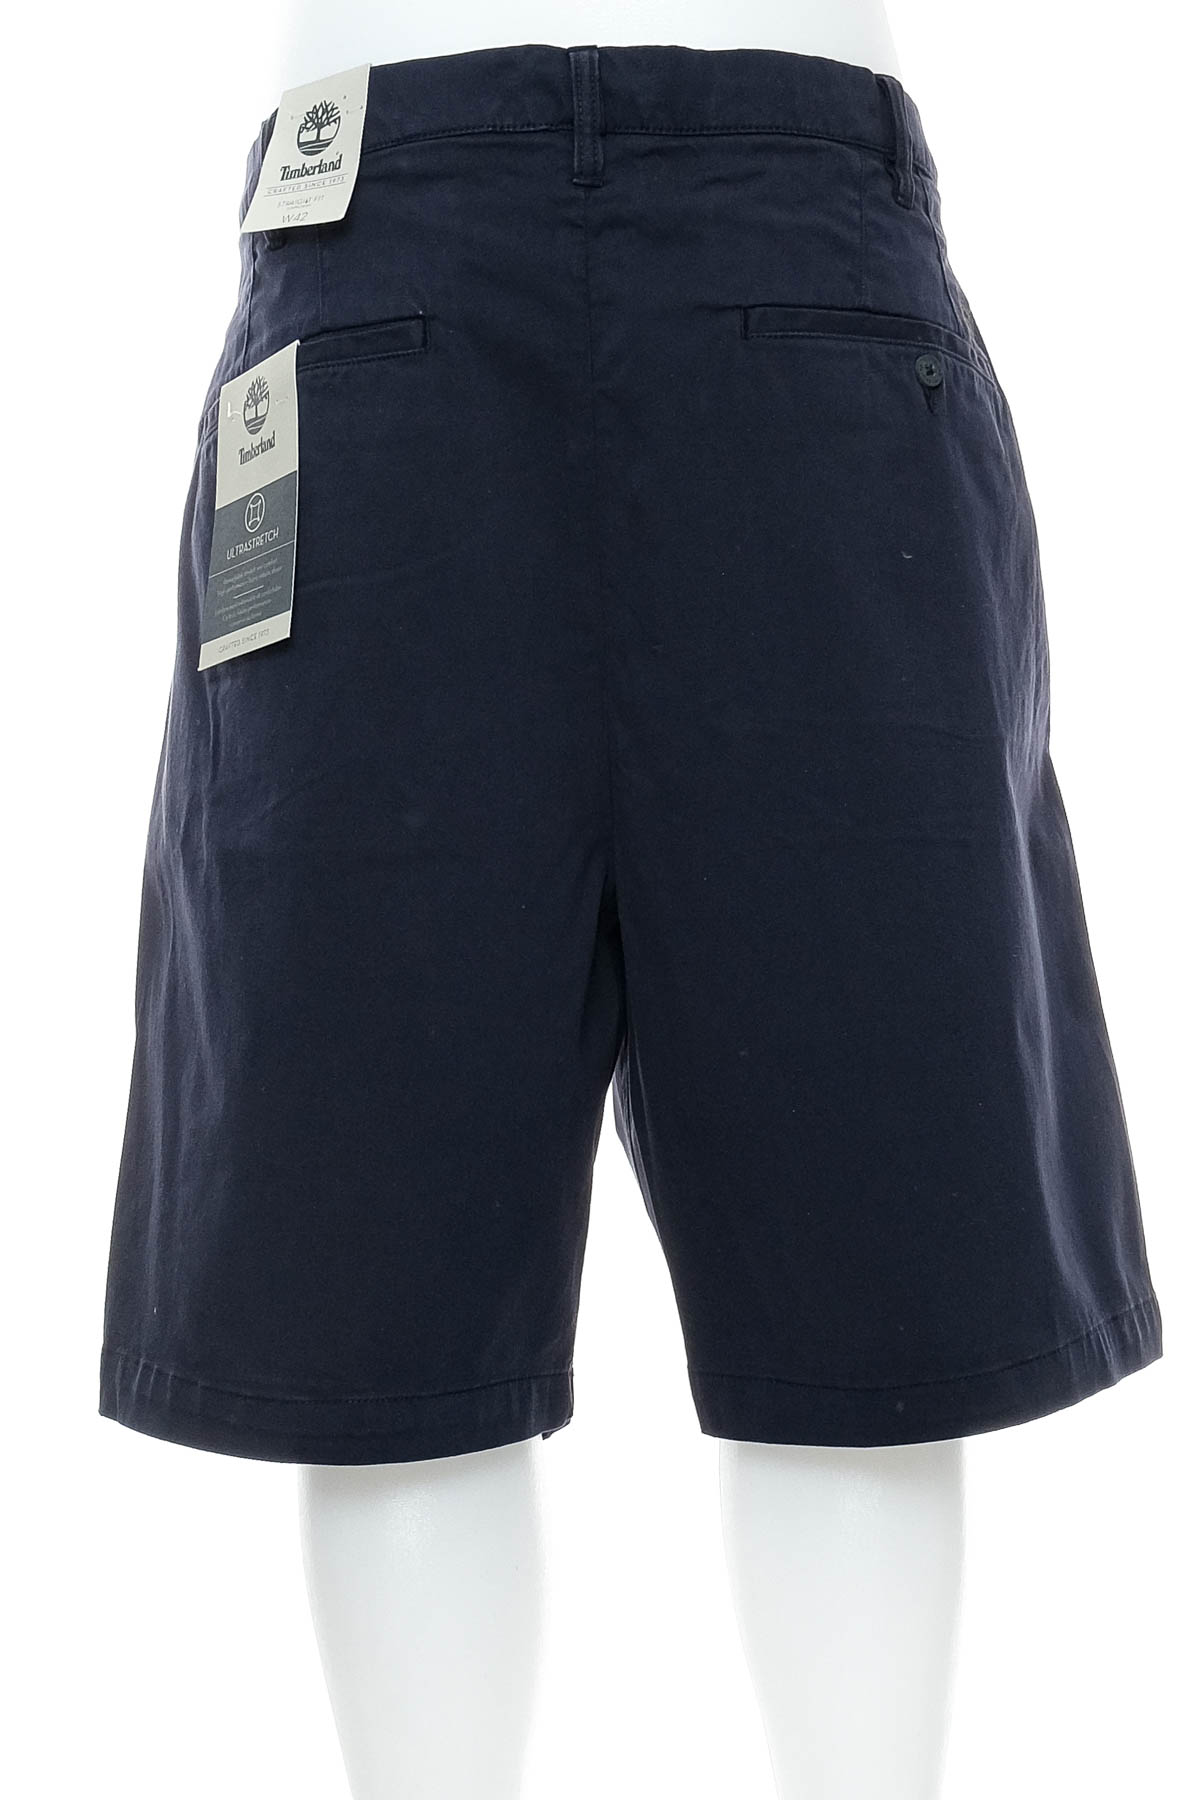 Men's shorts - Timberland - 1